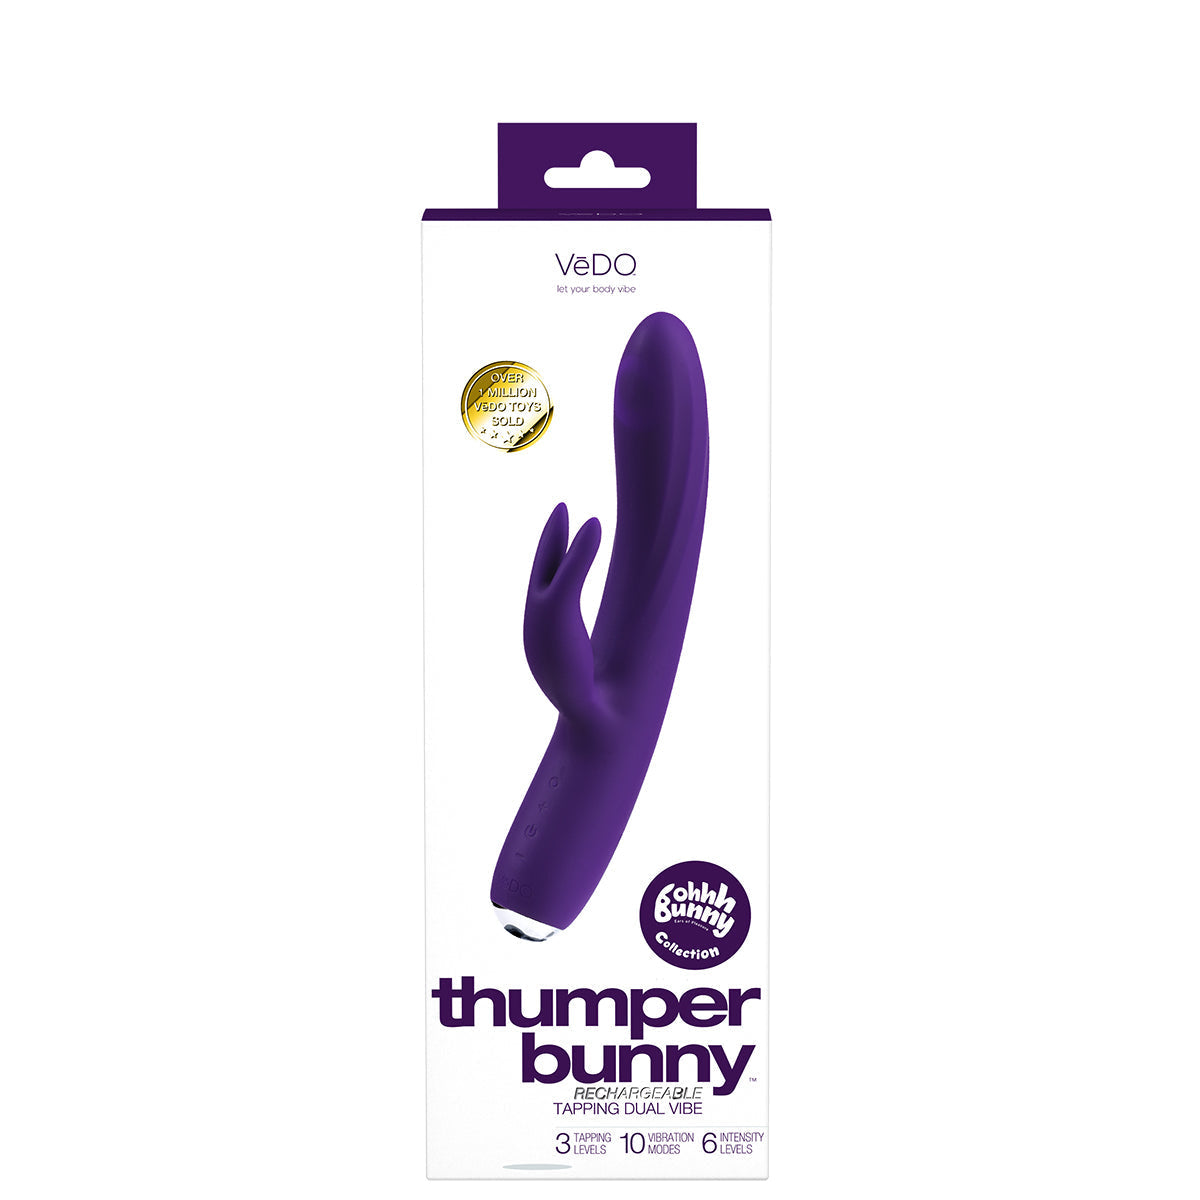 Thumper Bunny: Powerful G-Spot Vibrator by VeDO